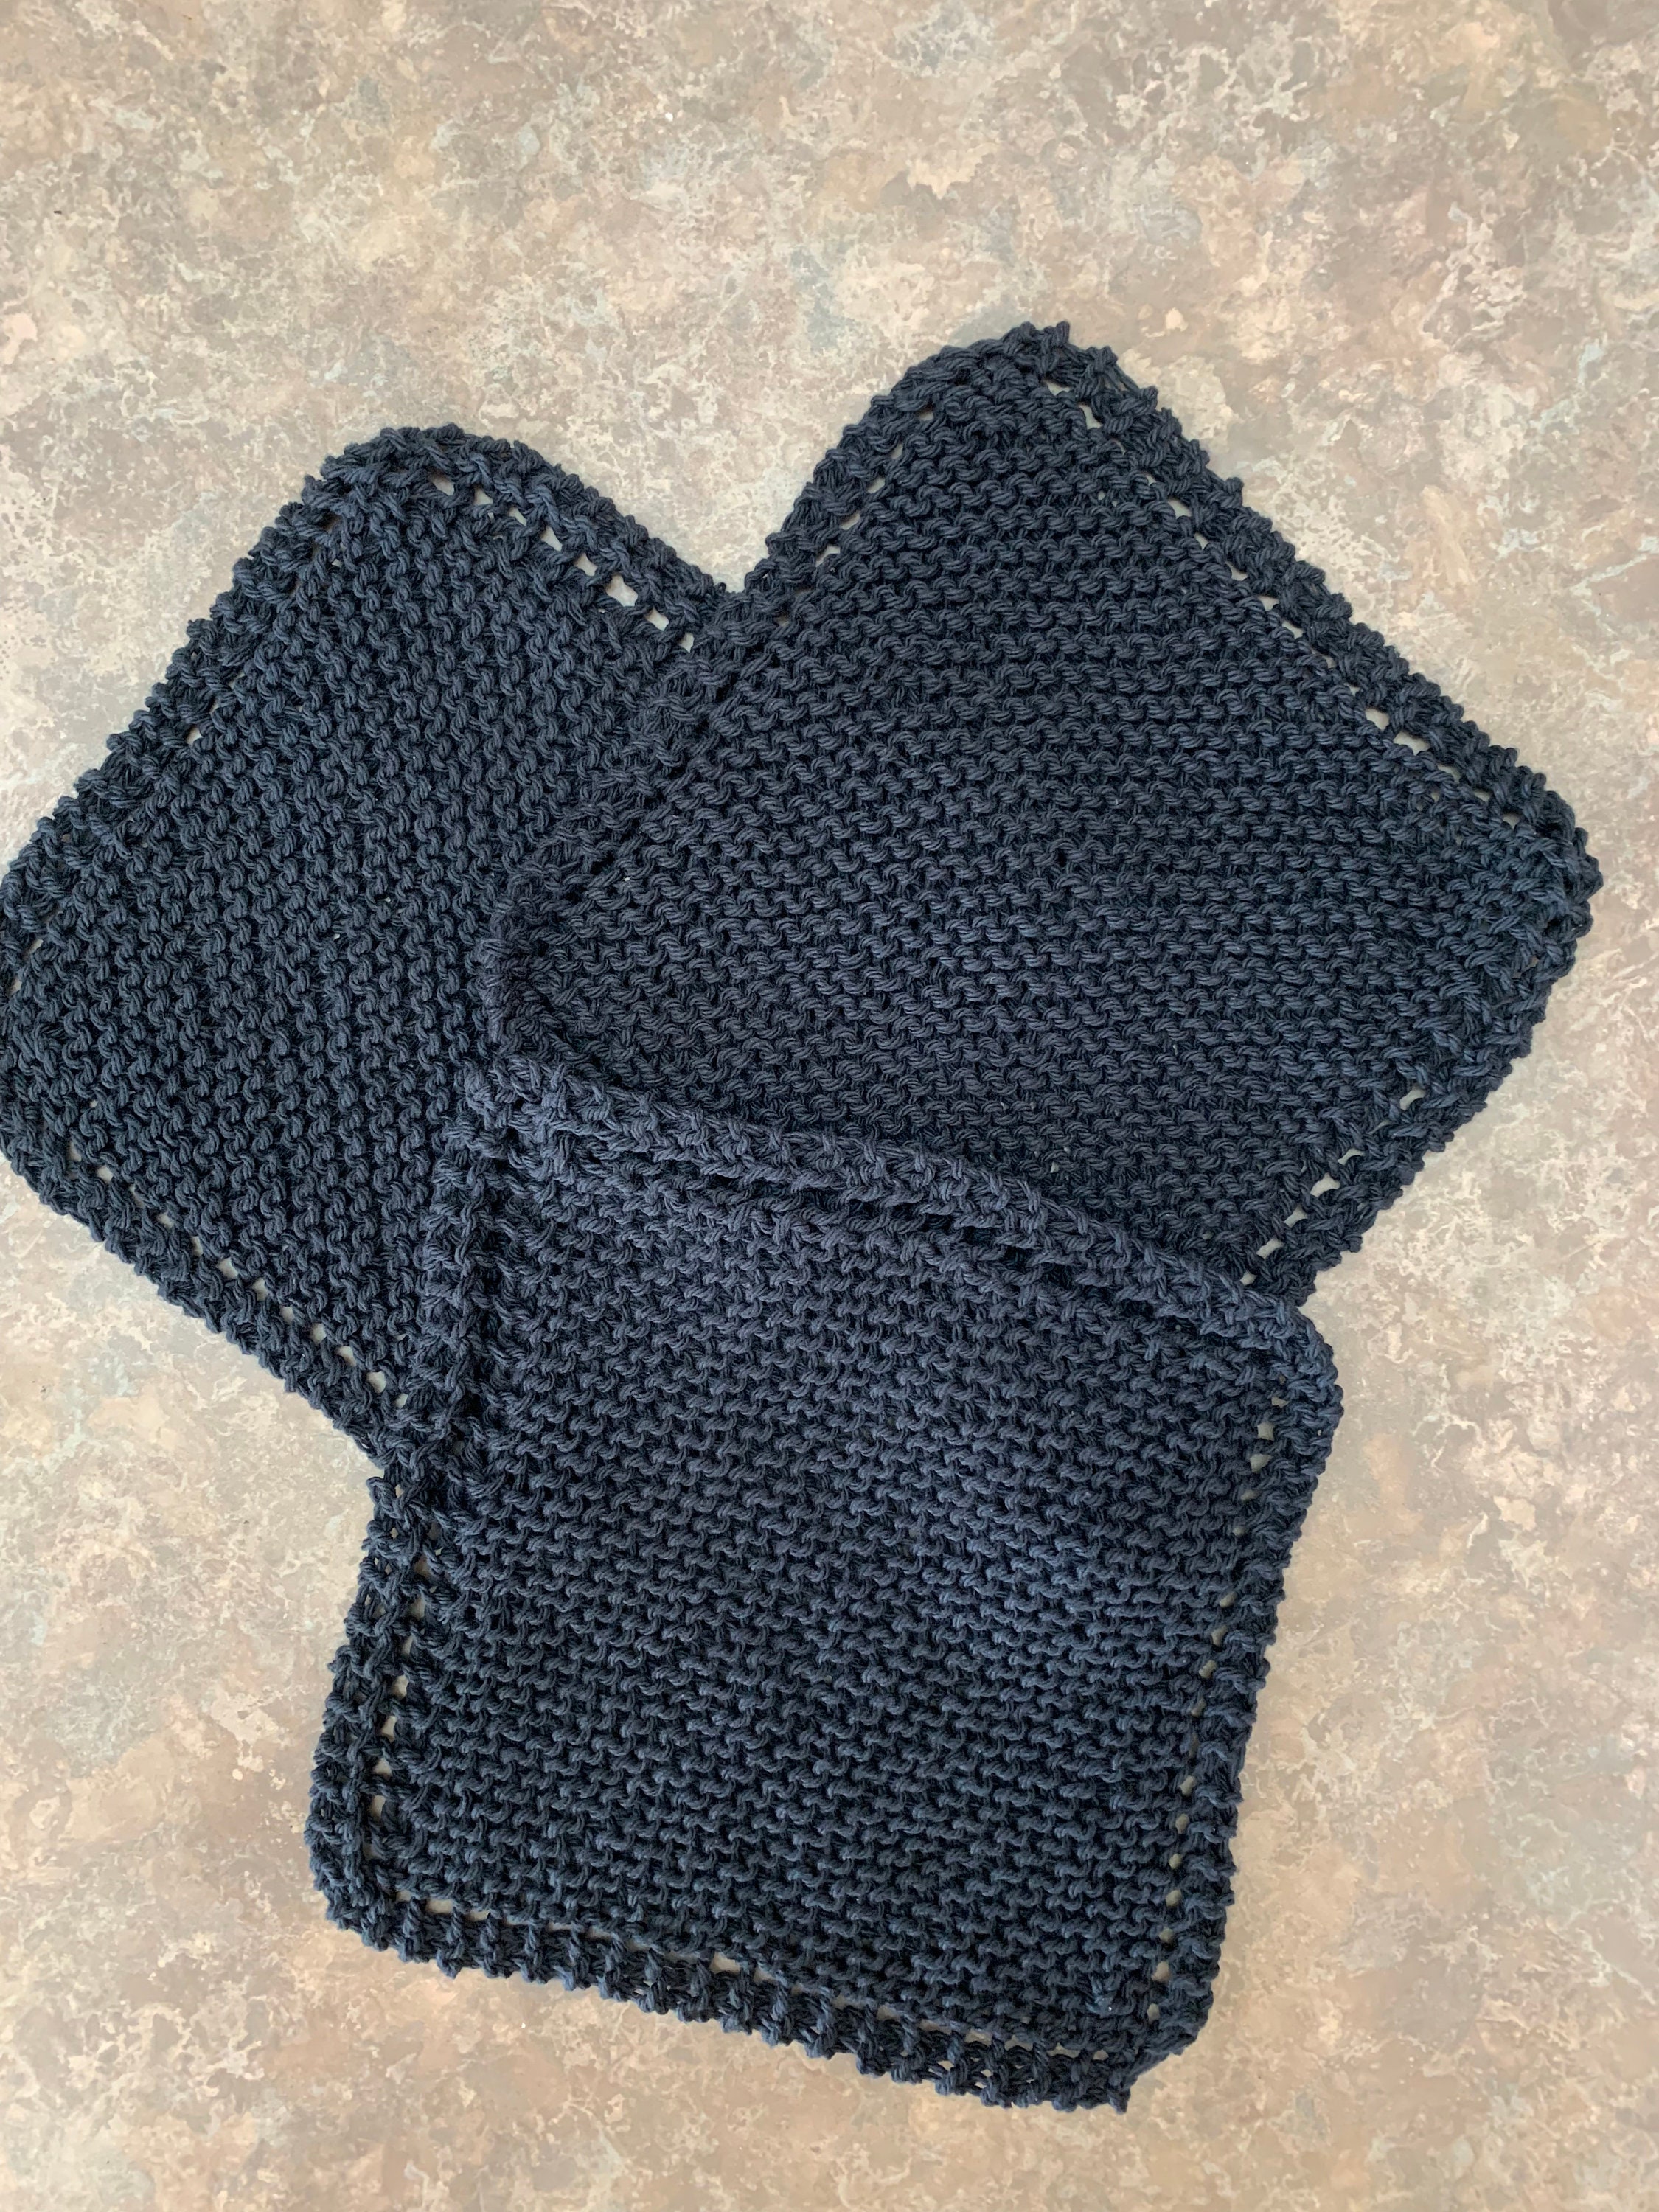 Knit Dish Cloths Black and Cream - Set of 3